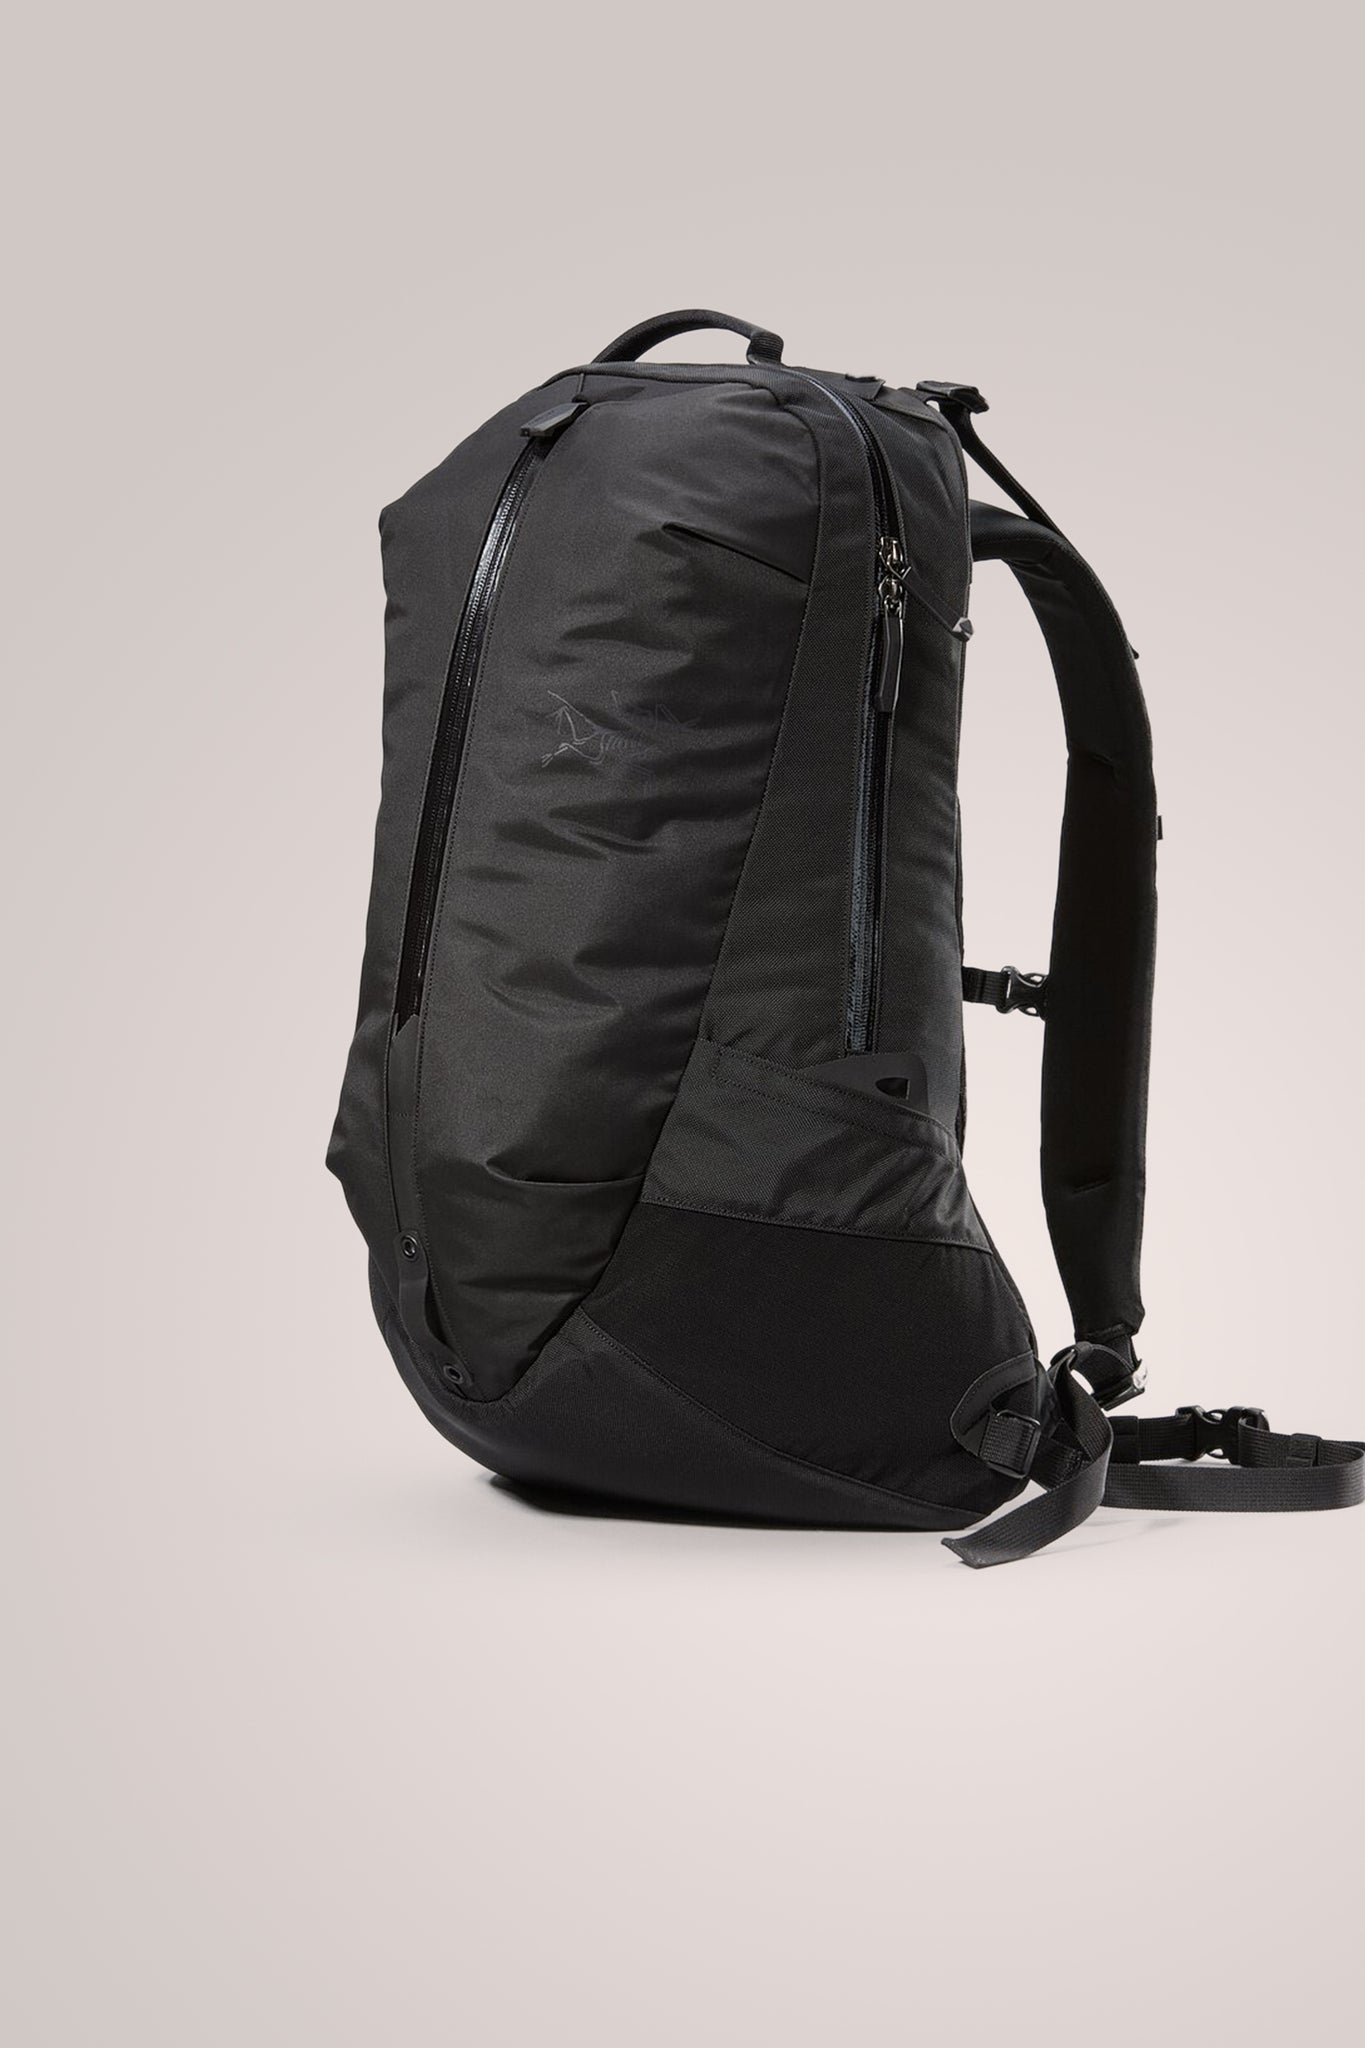 Arc'teryx Arro 22 Backpack in Black II